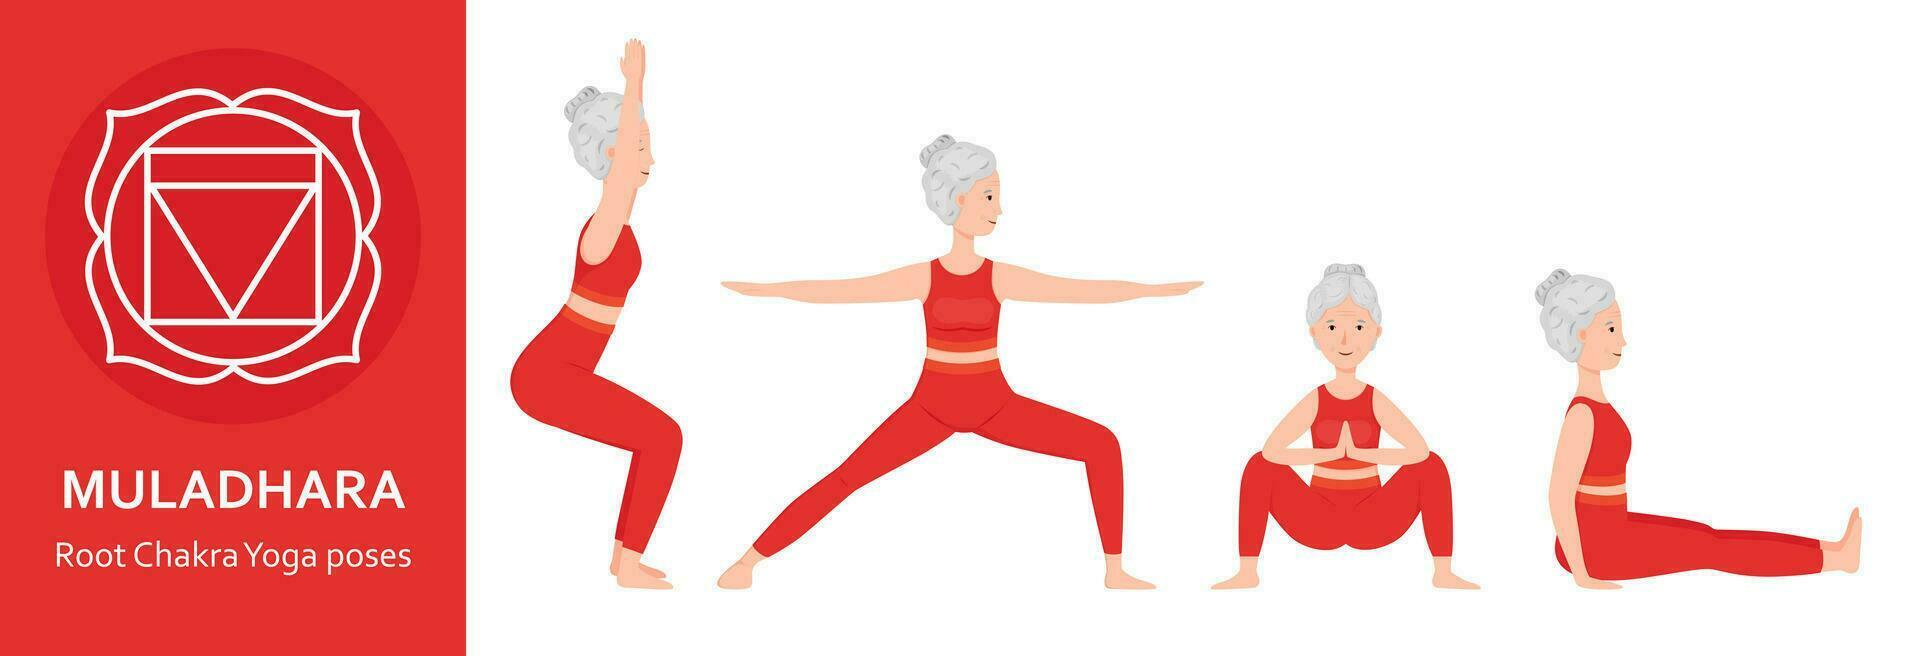 wortel chakra yoga poseert. ouderen vrouw beoefenen muladhara chakra yoga asana. gezond levensstijl. vlak tekenfilm karakter. vector illustratie